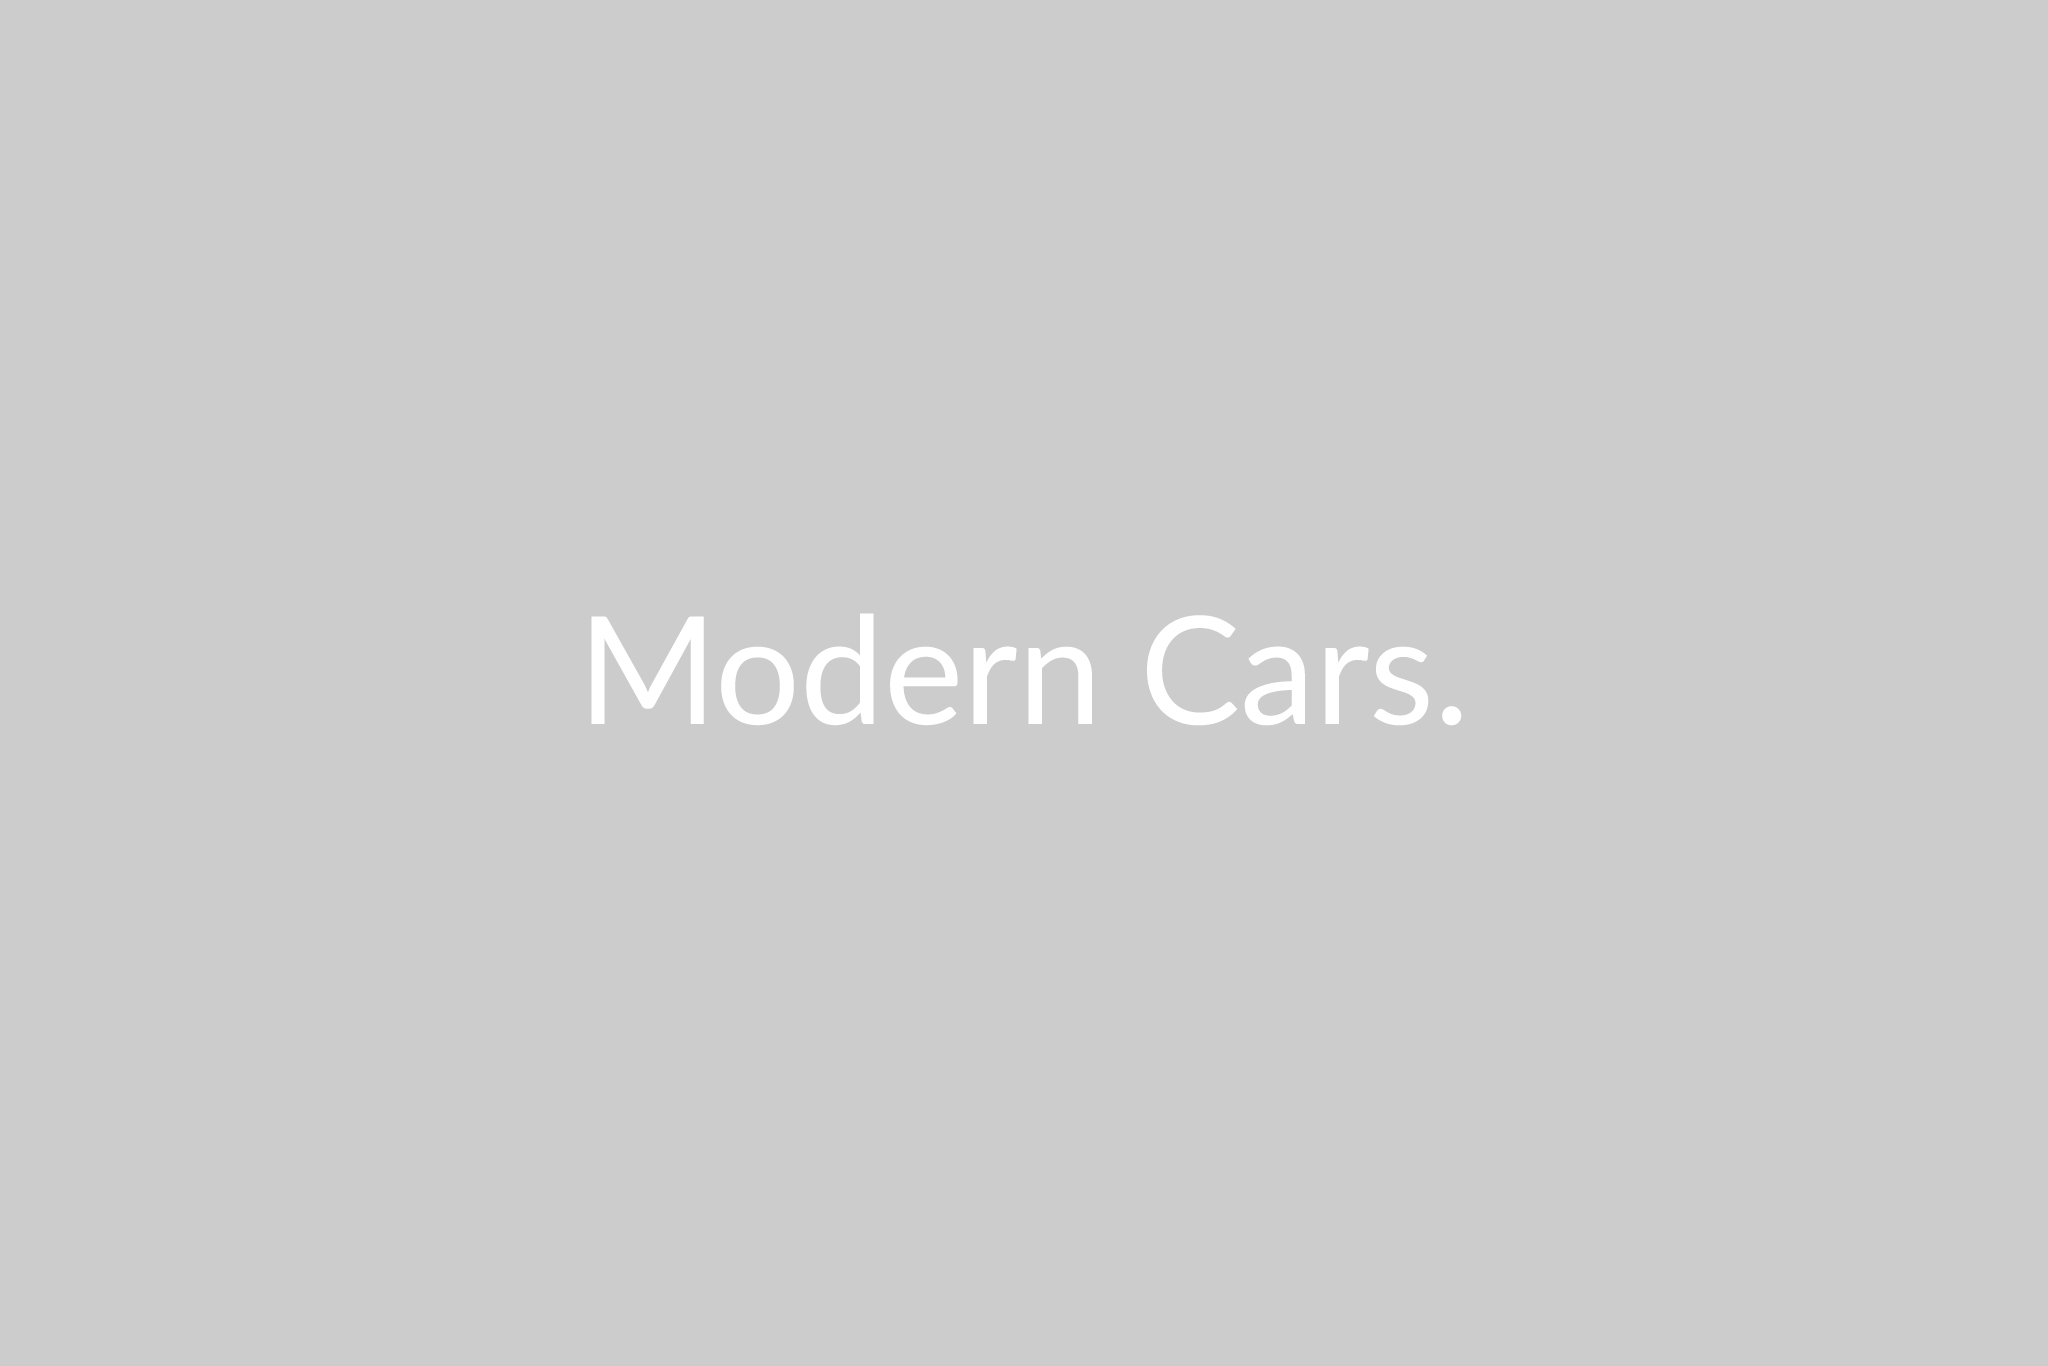  Modern Cars